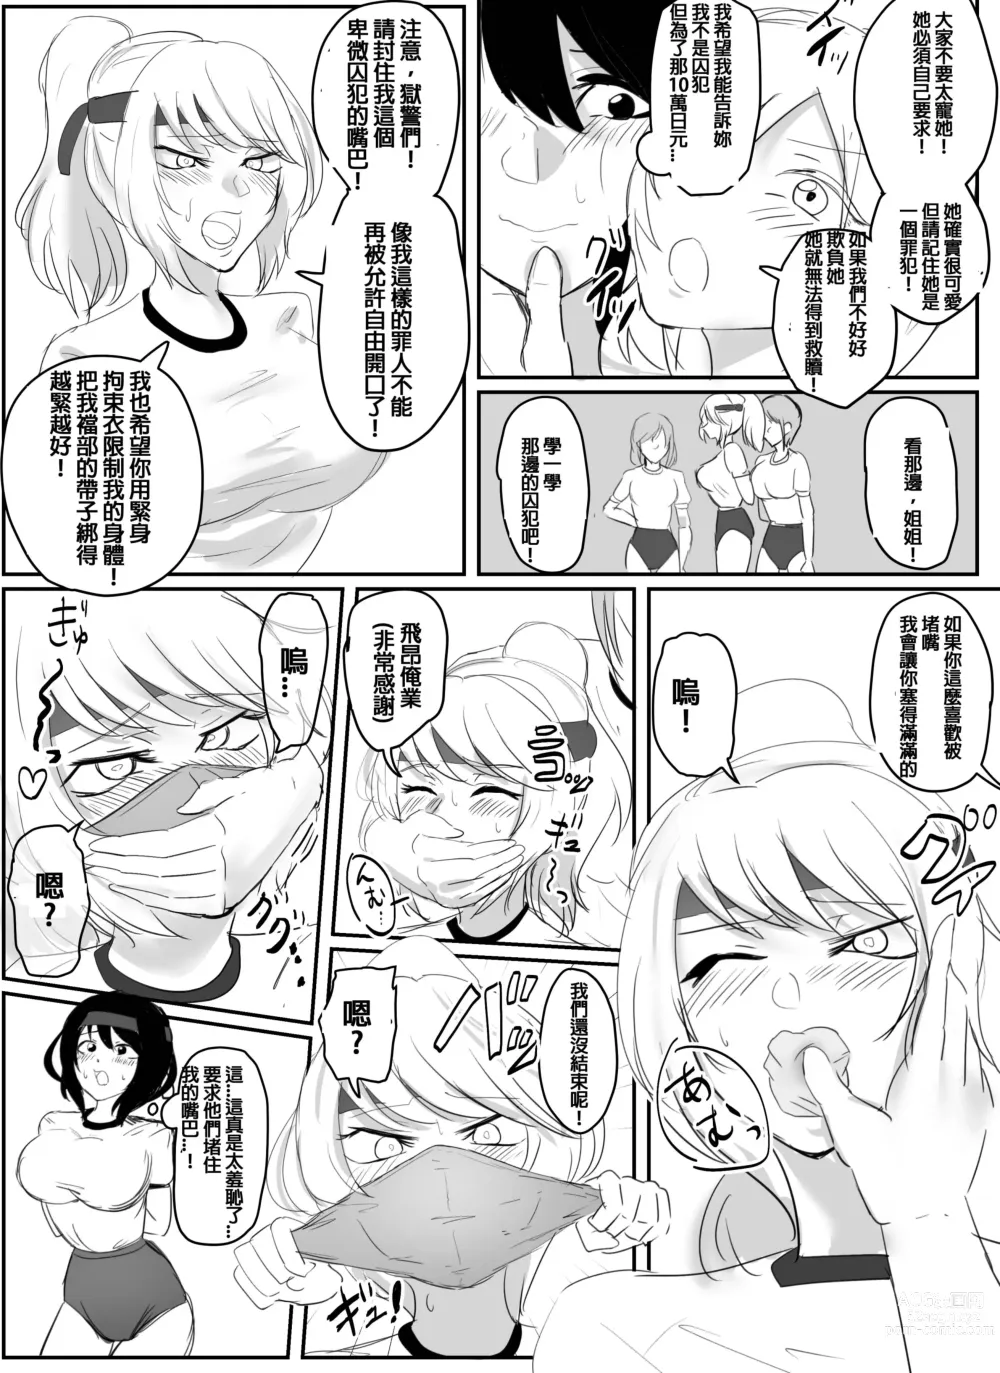 Page 24 of doujinshi 佳奈美囚人運動會!